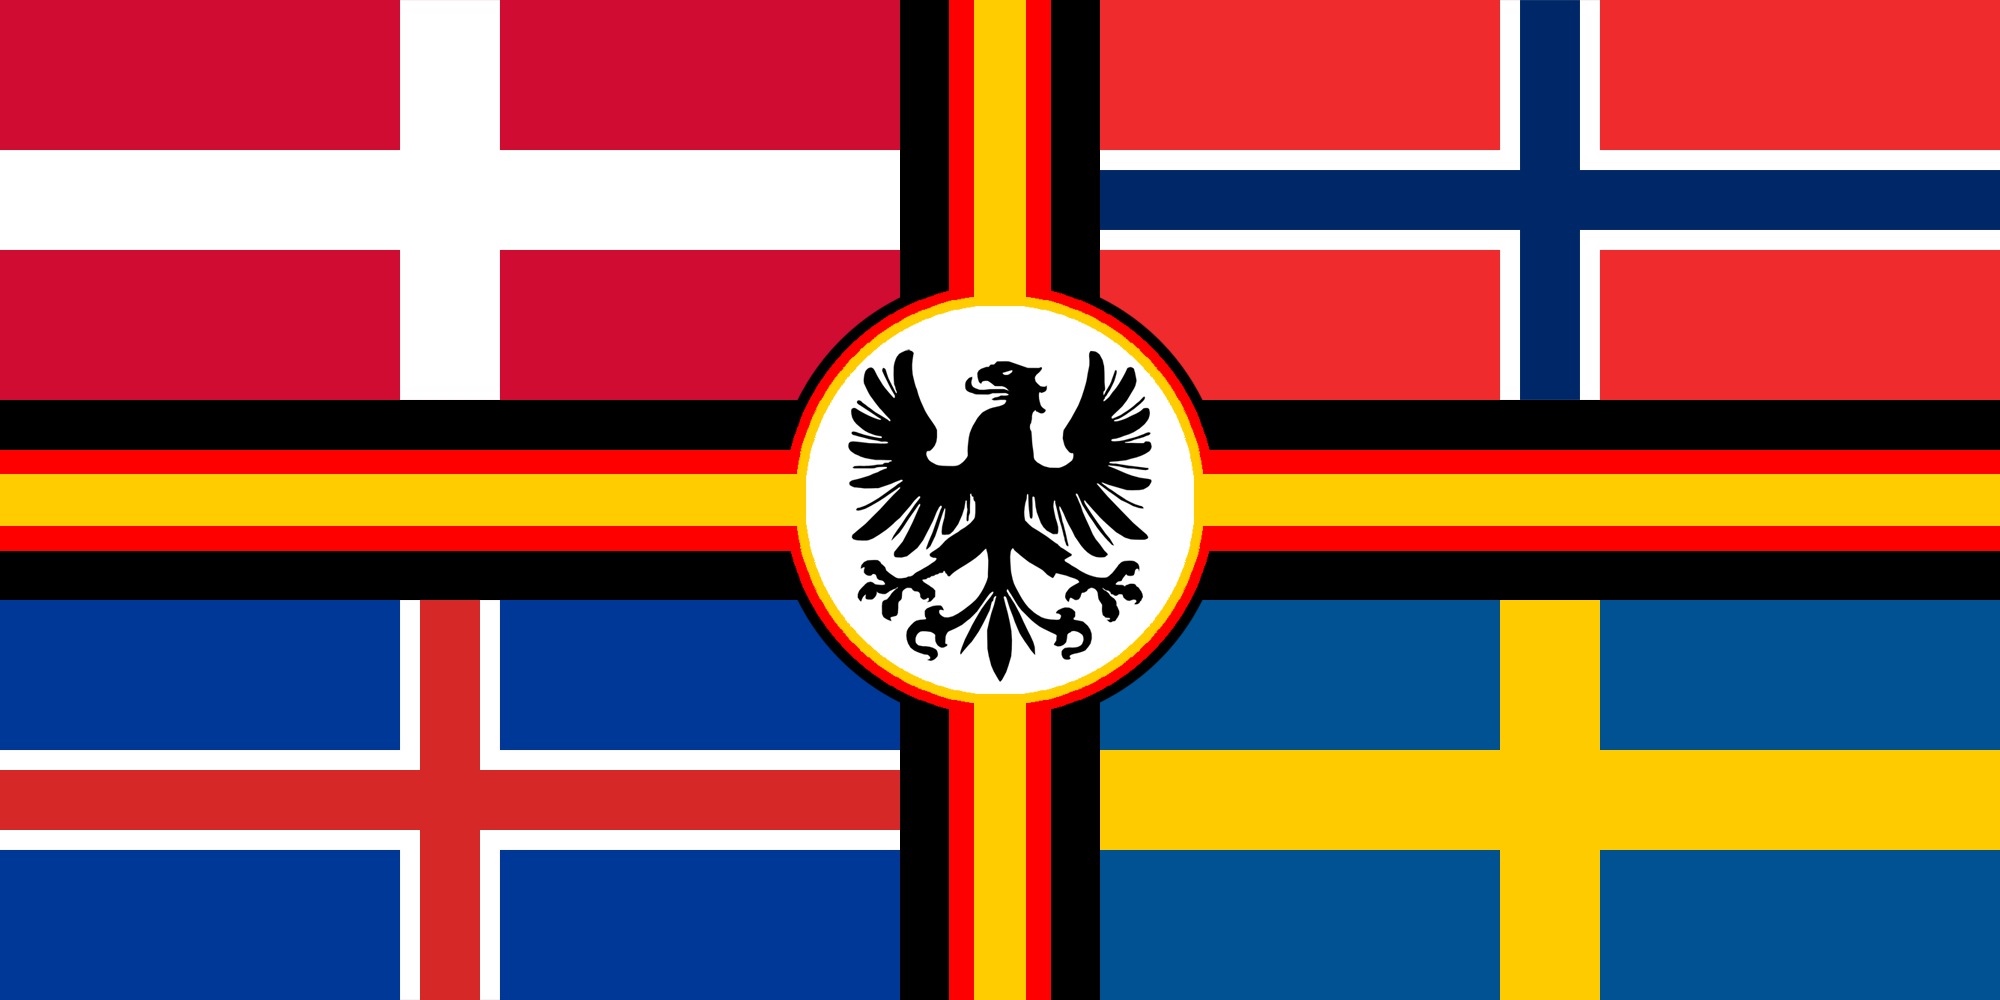 germanic_scandinavian_union_by_kristo1594-d4nnanj.png